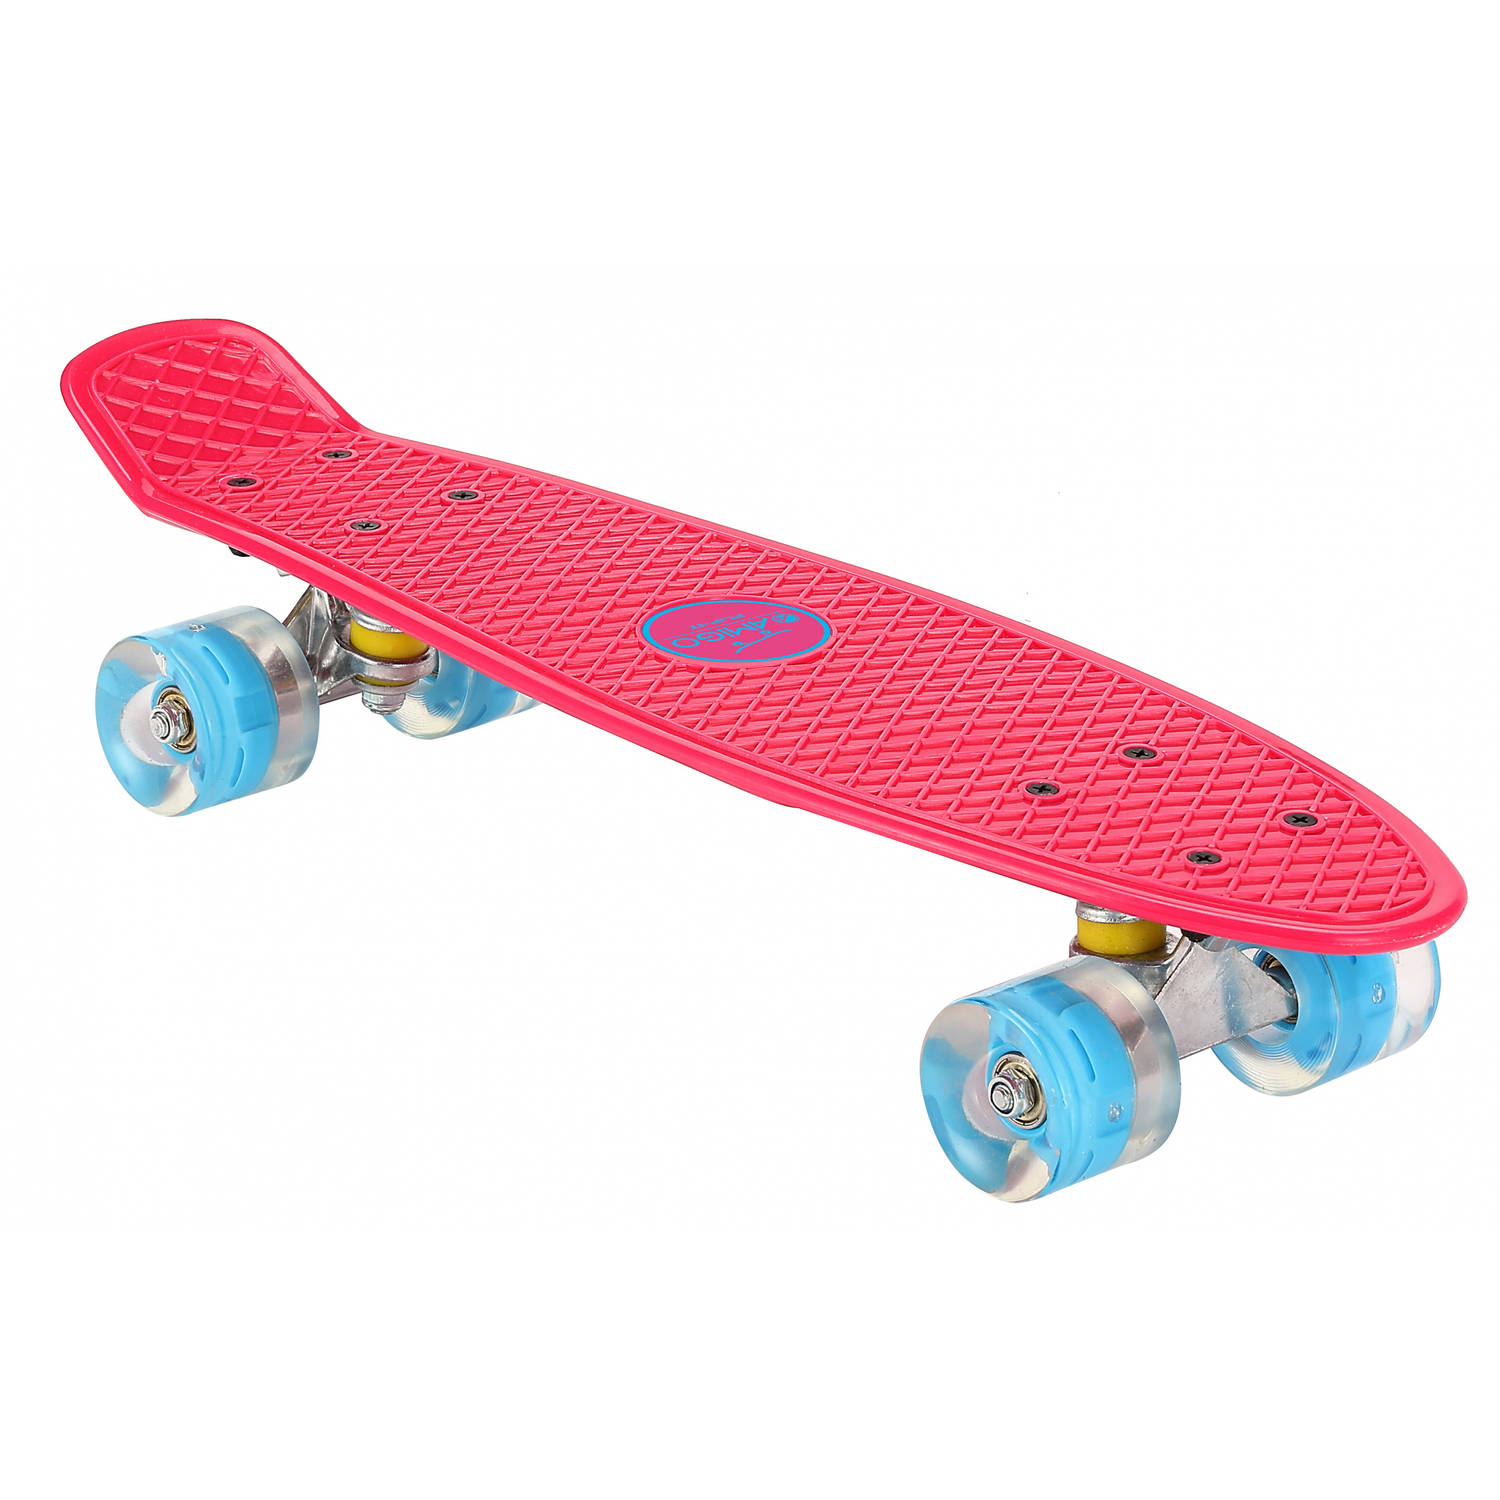 AMIGO skateboard met ledverlichting 55,5 cm roze-blauw